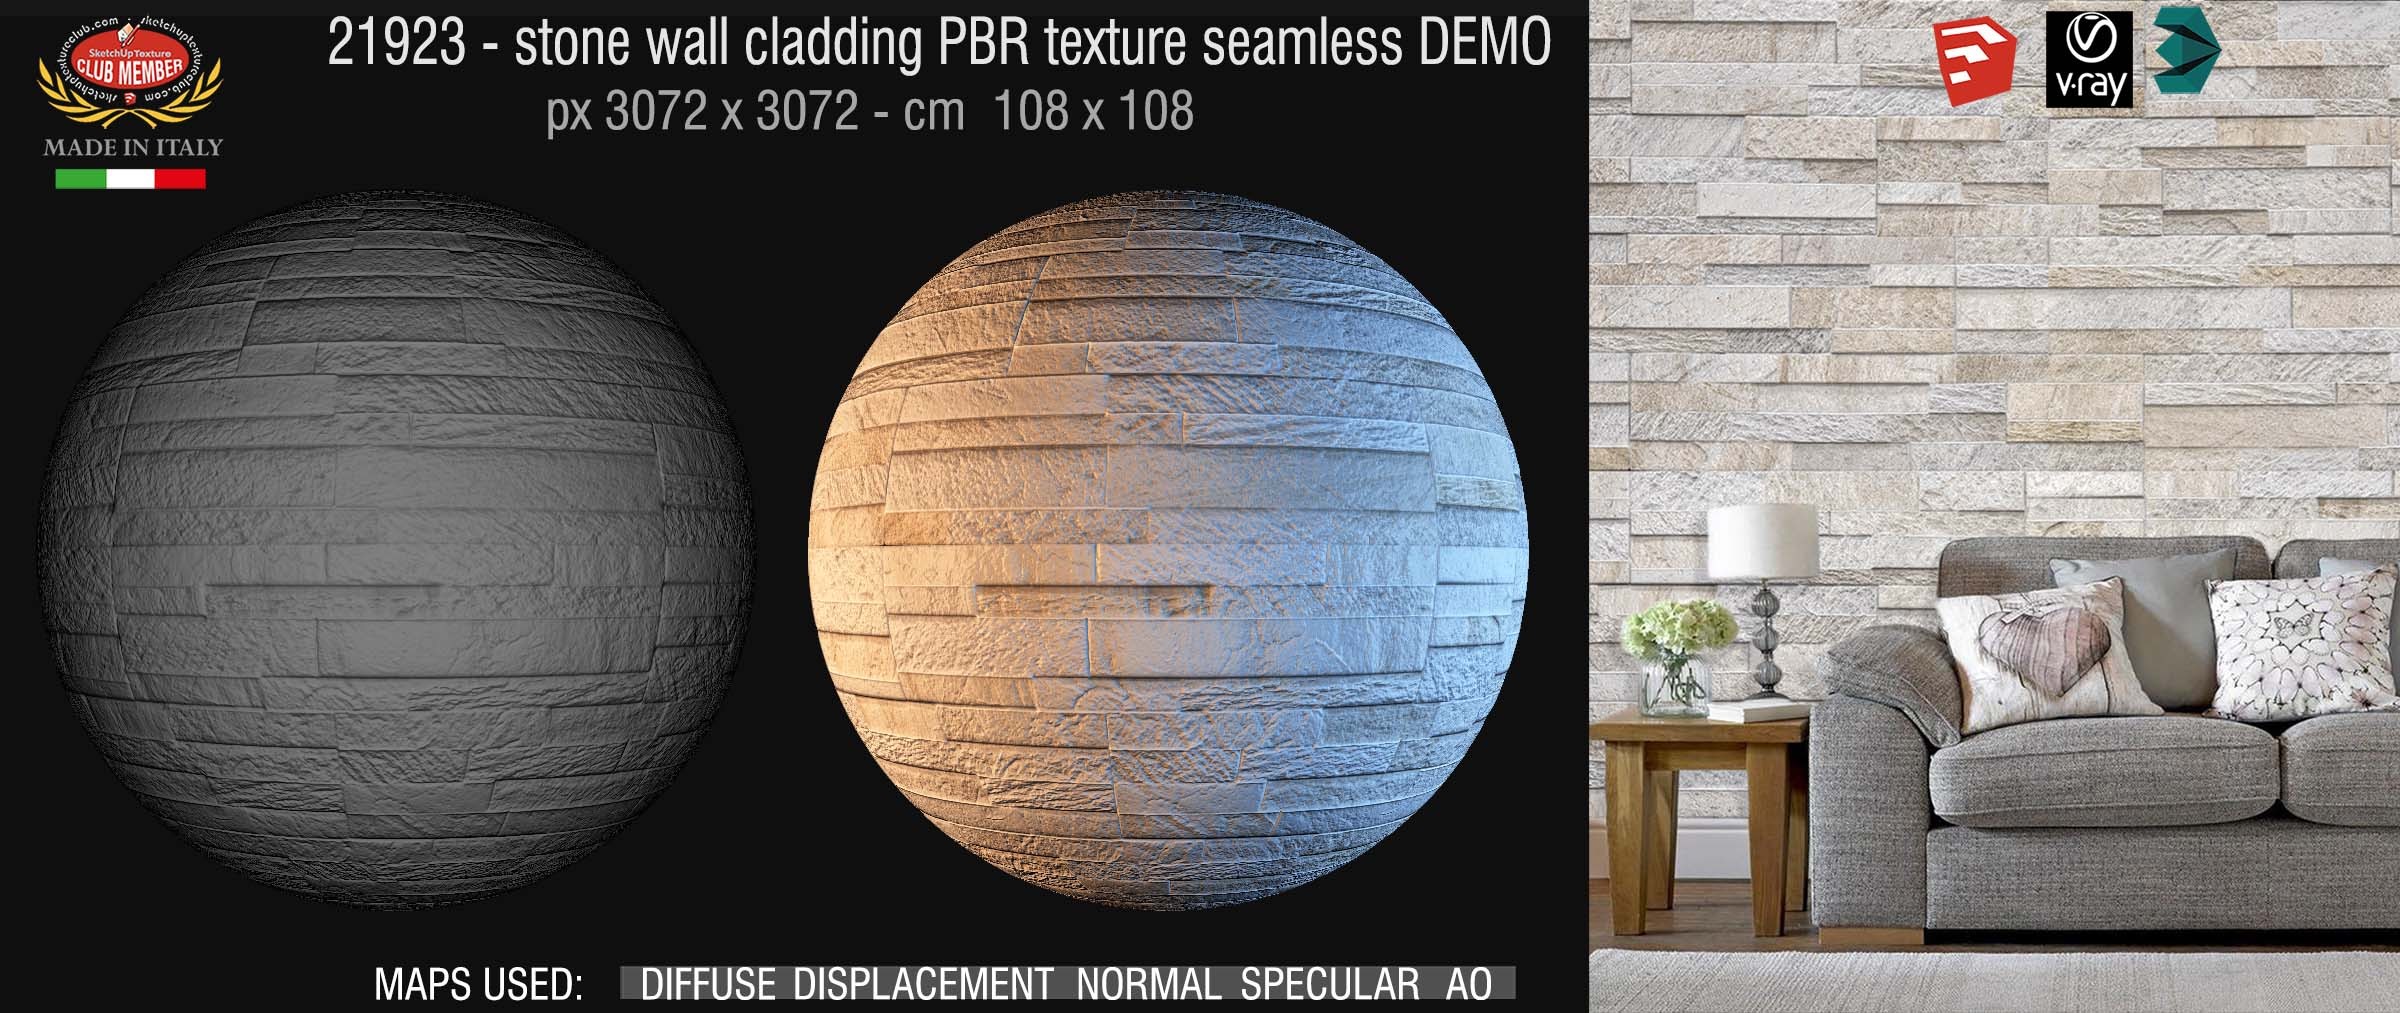 21923 stone wall cladding PBR texture seamless DEMO